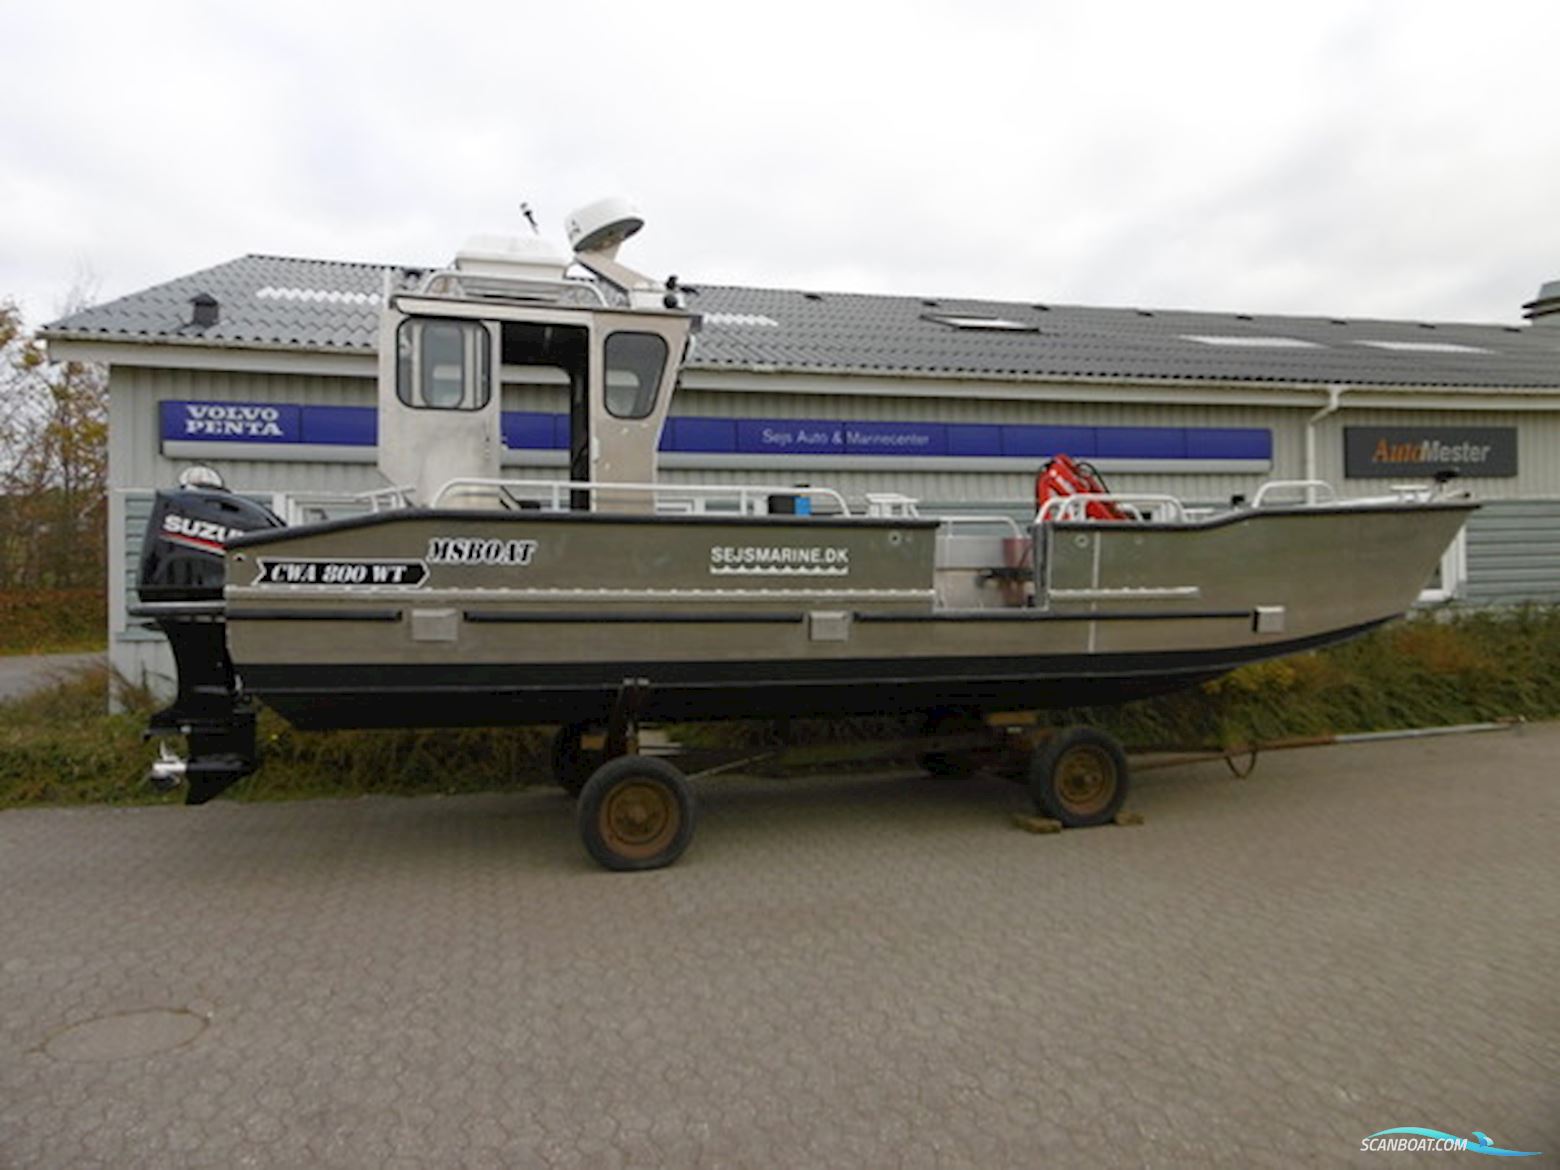 MS Cwa800WT Beam 2,55 (Cabin Version 5) Motor boat 2022, Denmark